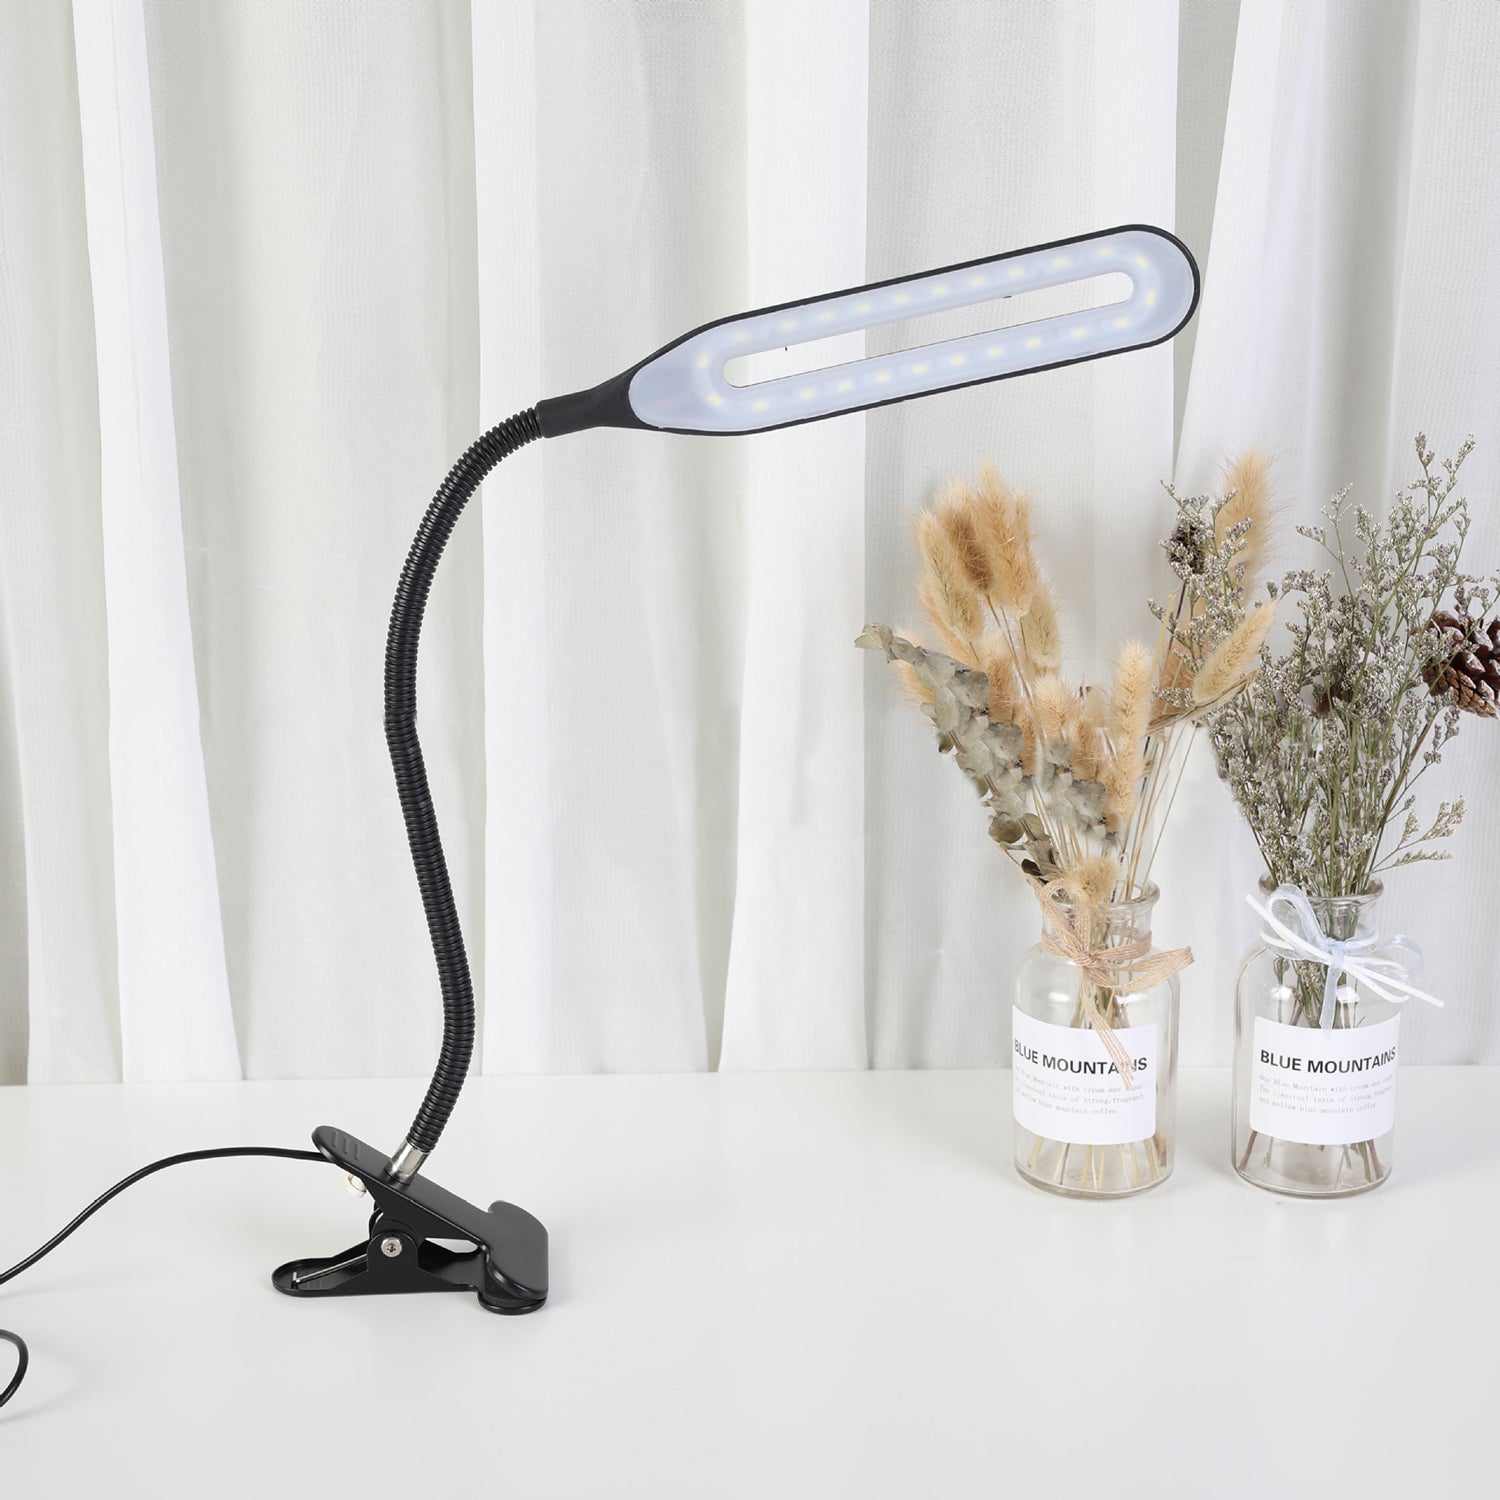 Plastikklemme LED LESSE LESUNG MODERN MODERLICHE EYE SCHREIBUNG USB MINI DESK LAMP mit flexibles Arm